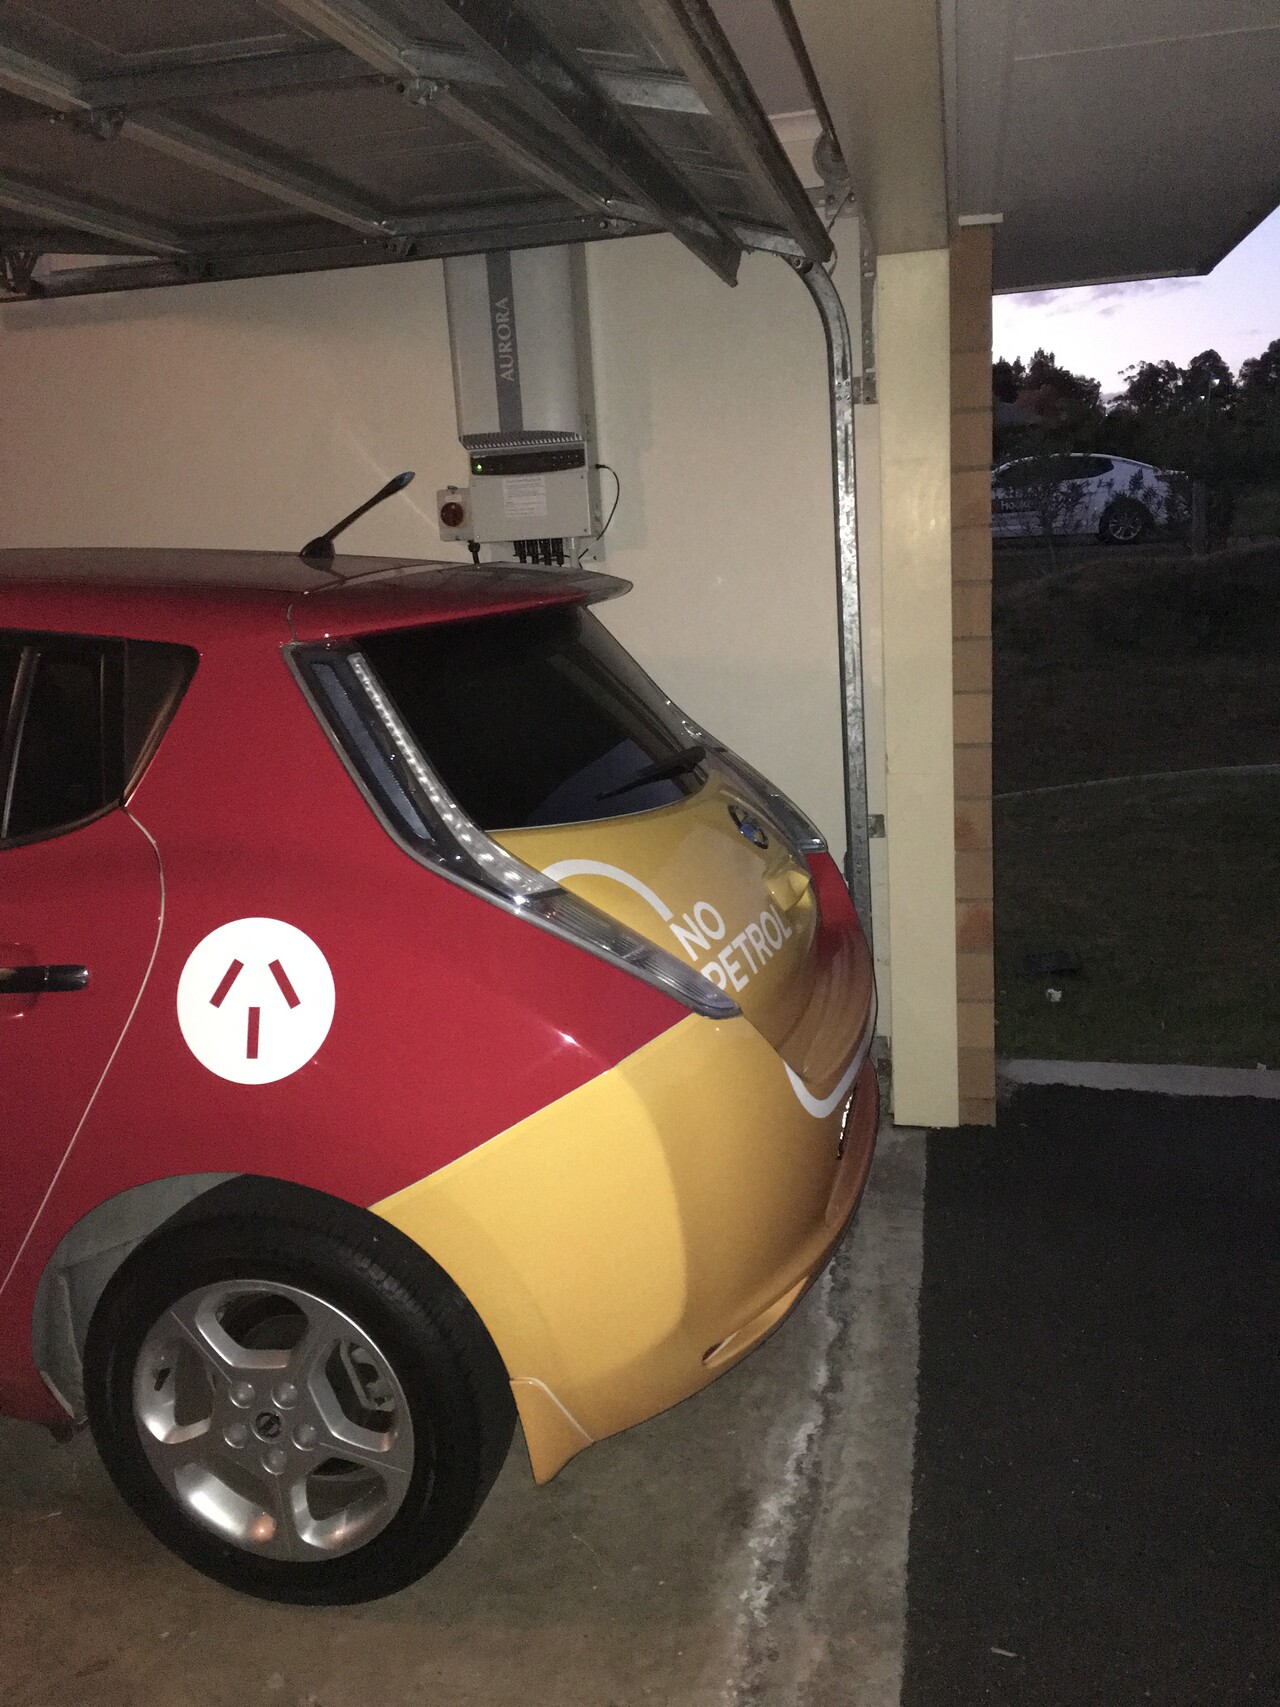 Nissan Leaf in Garage